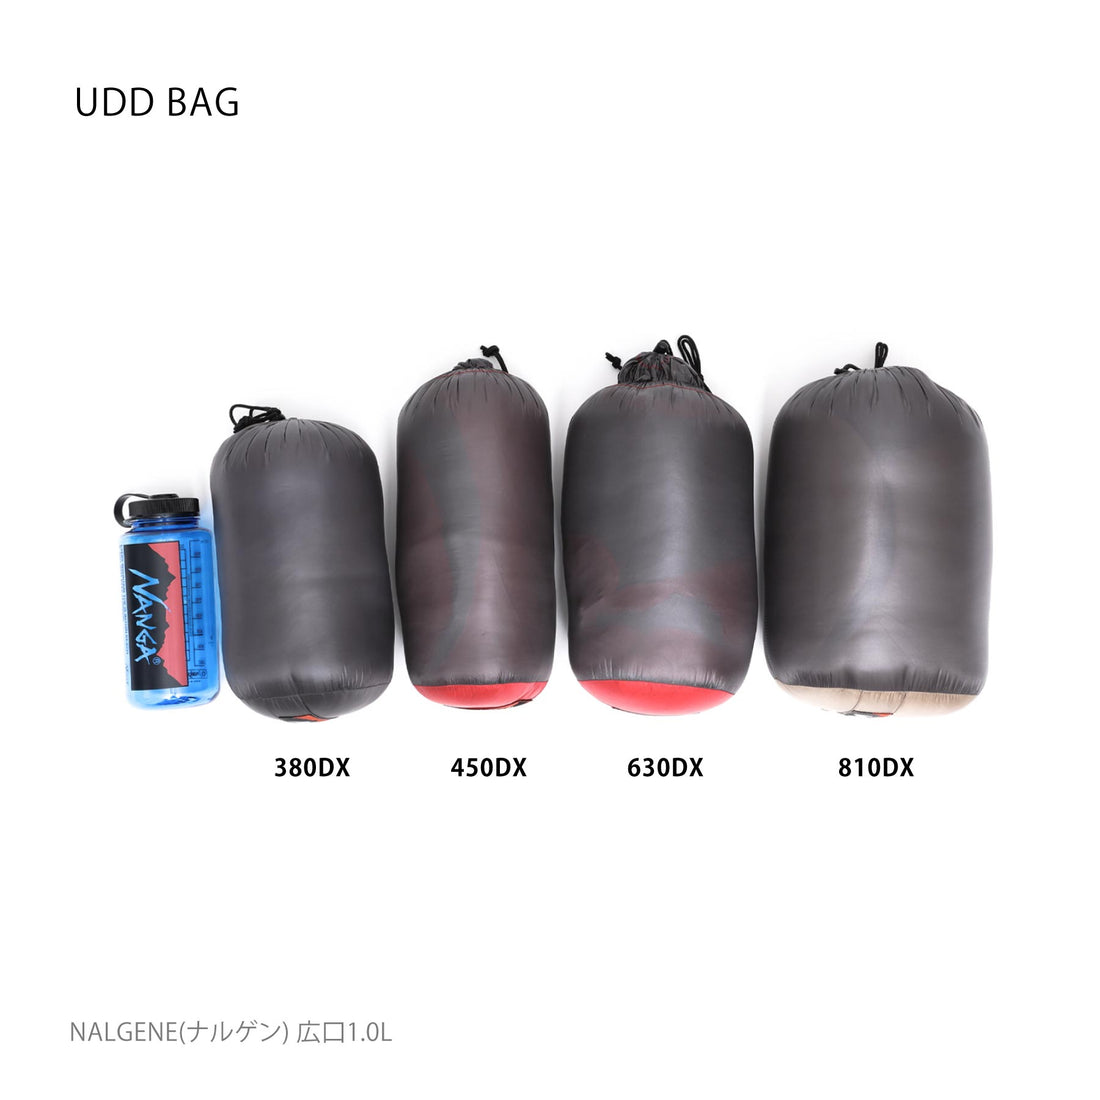 UDD BAG 630DX